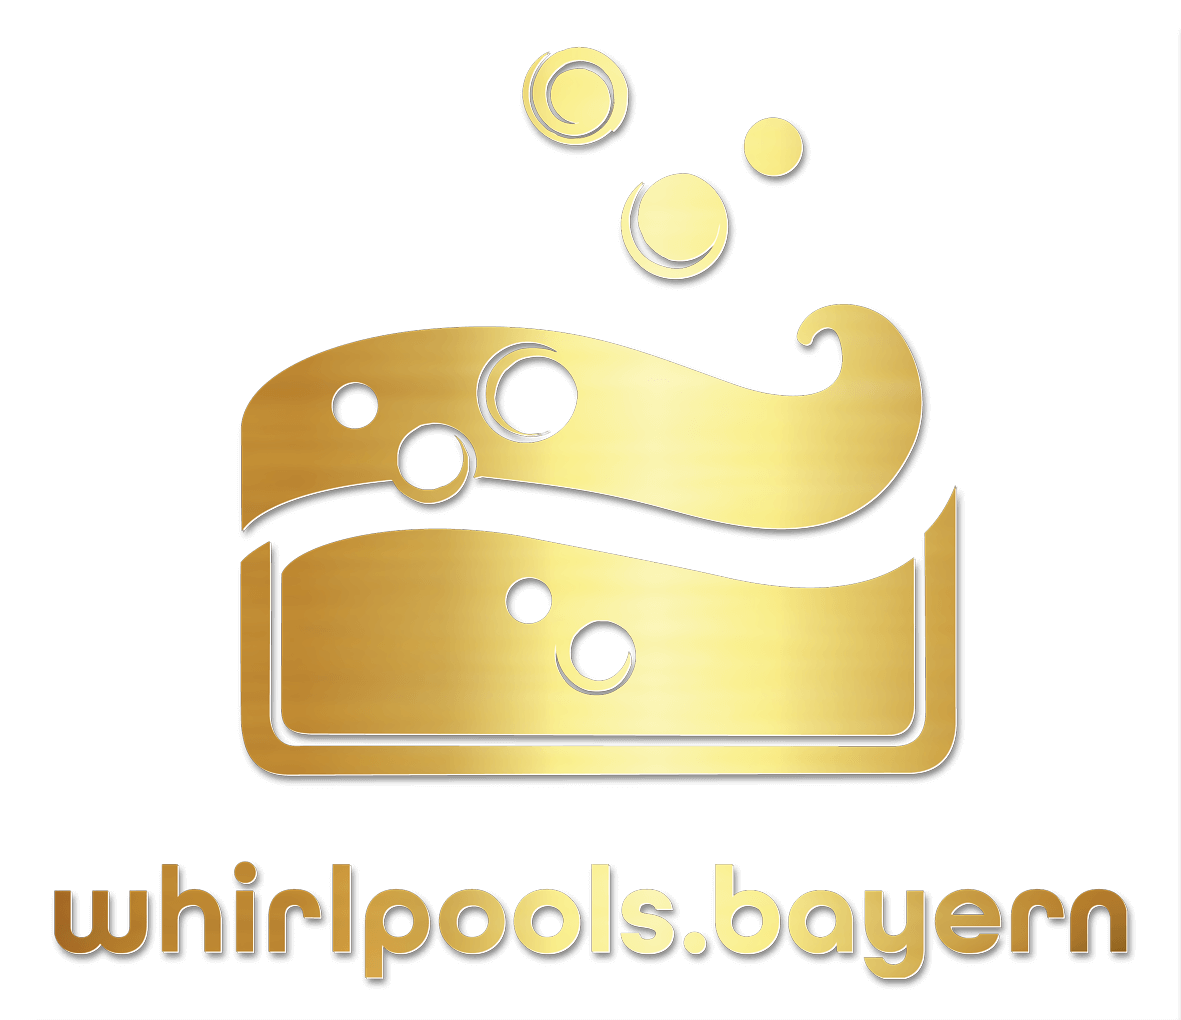 Whirlpools & Swim Spas